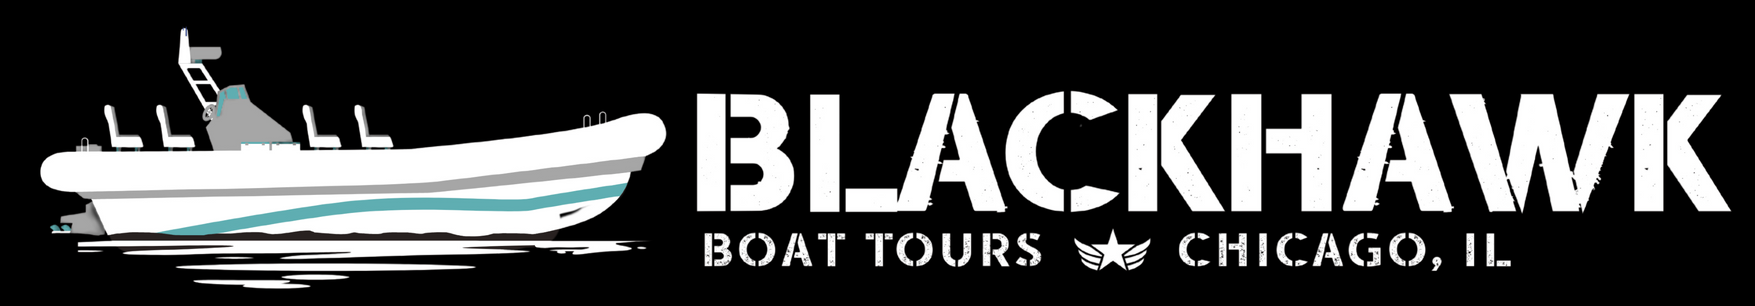 chicago river private boat tours